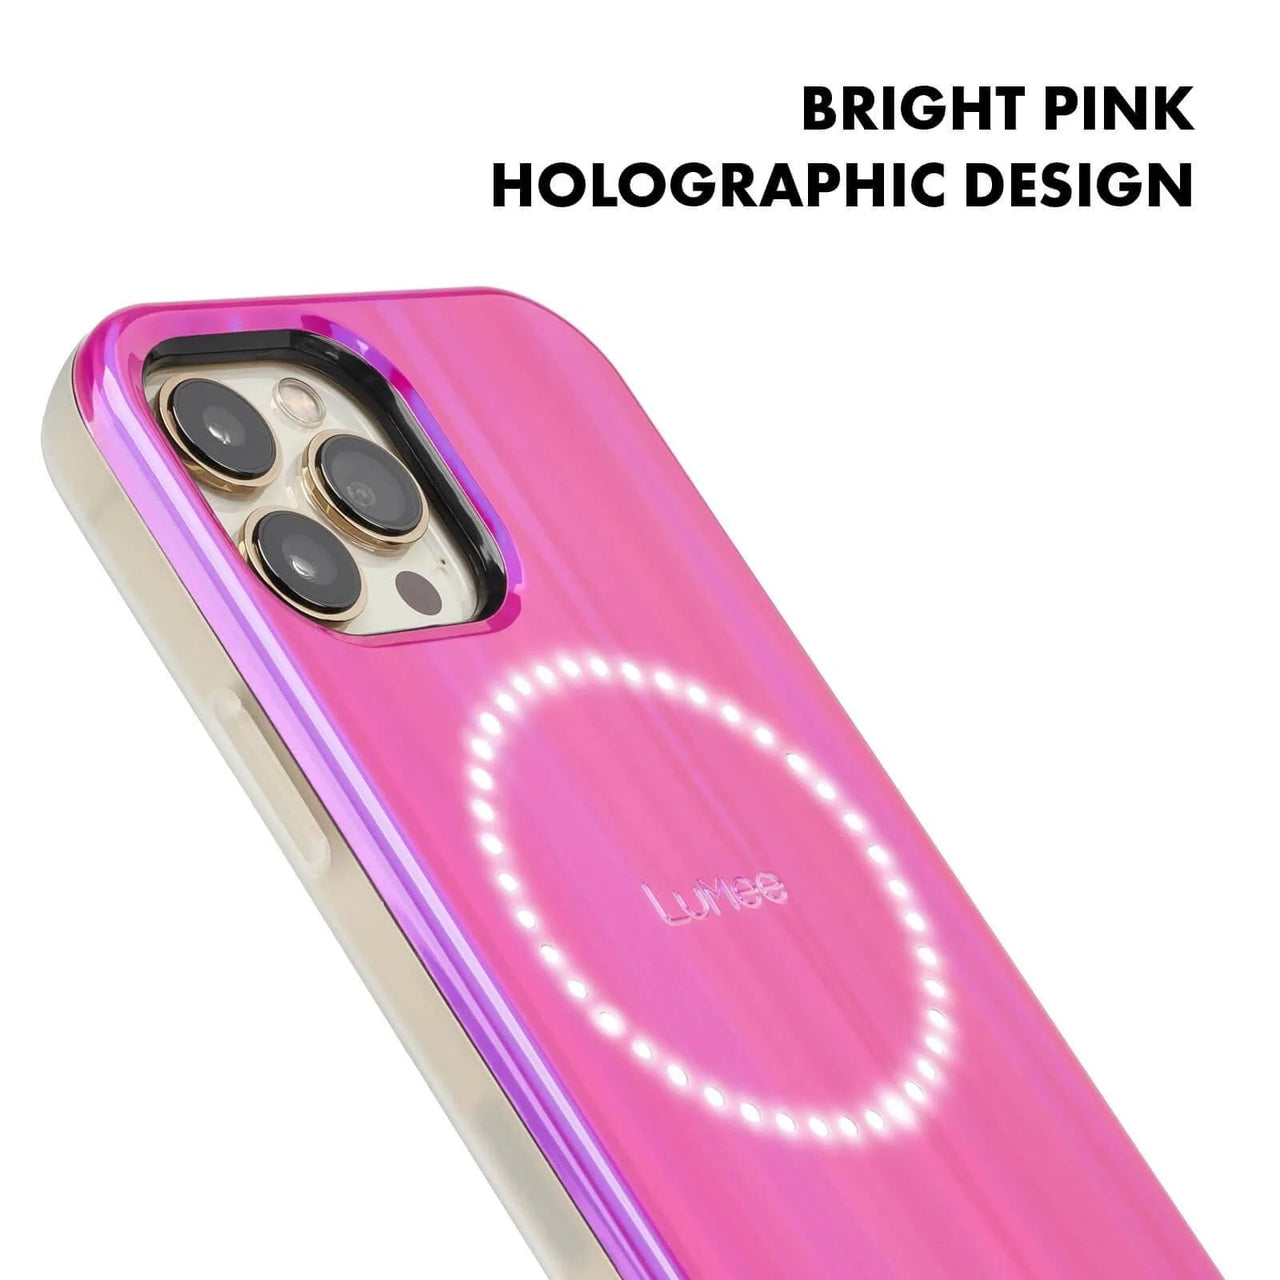 Halo Hot Pink Voltage